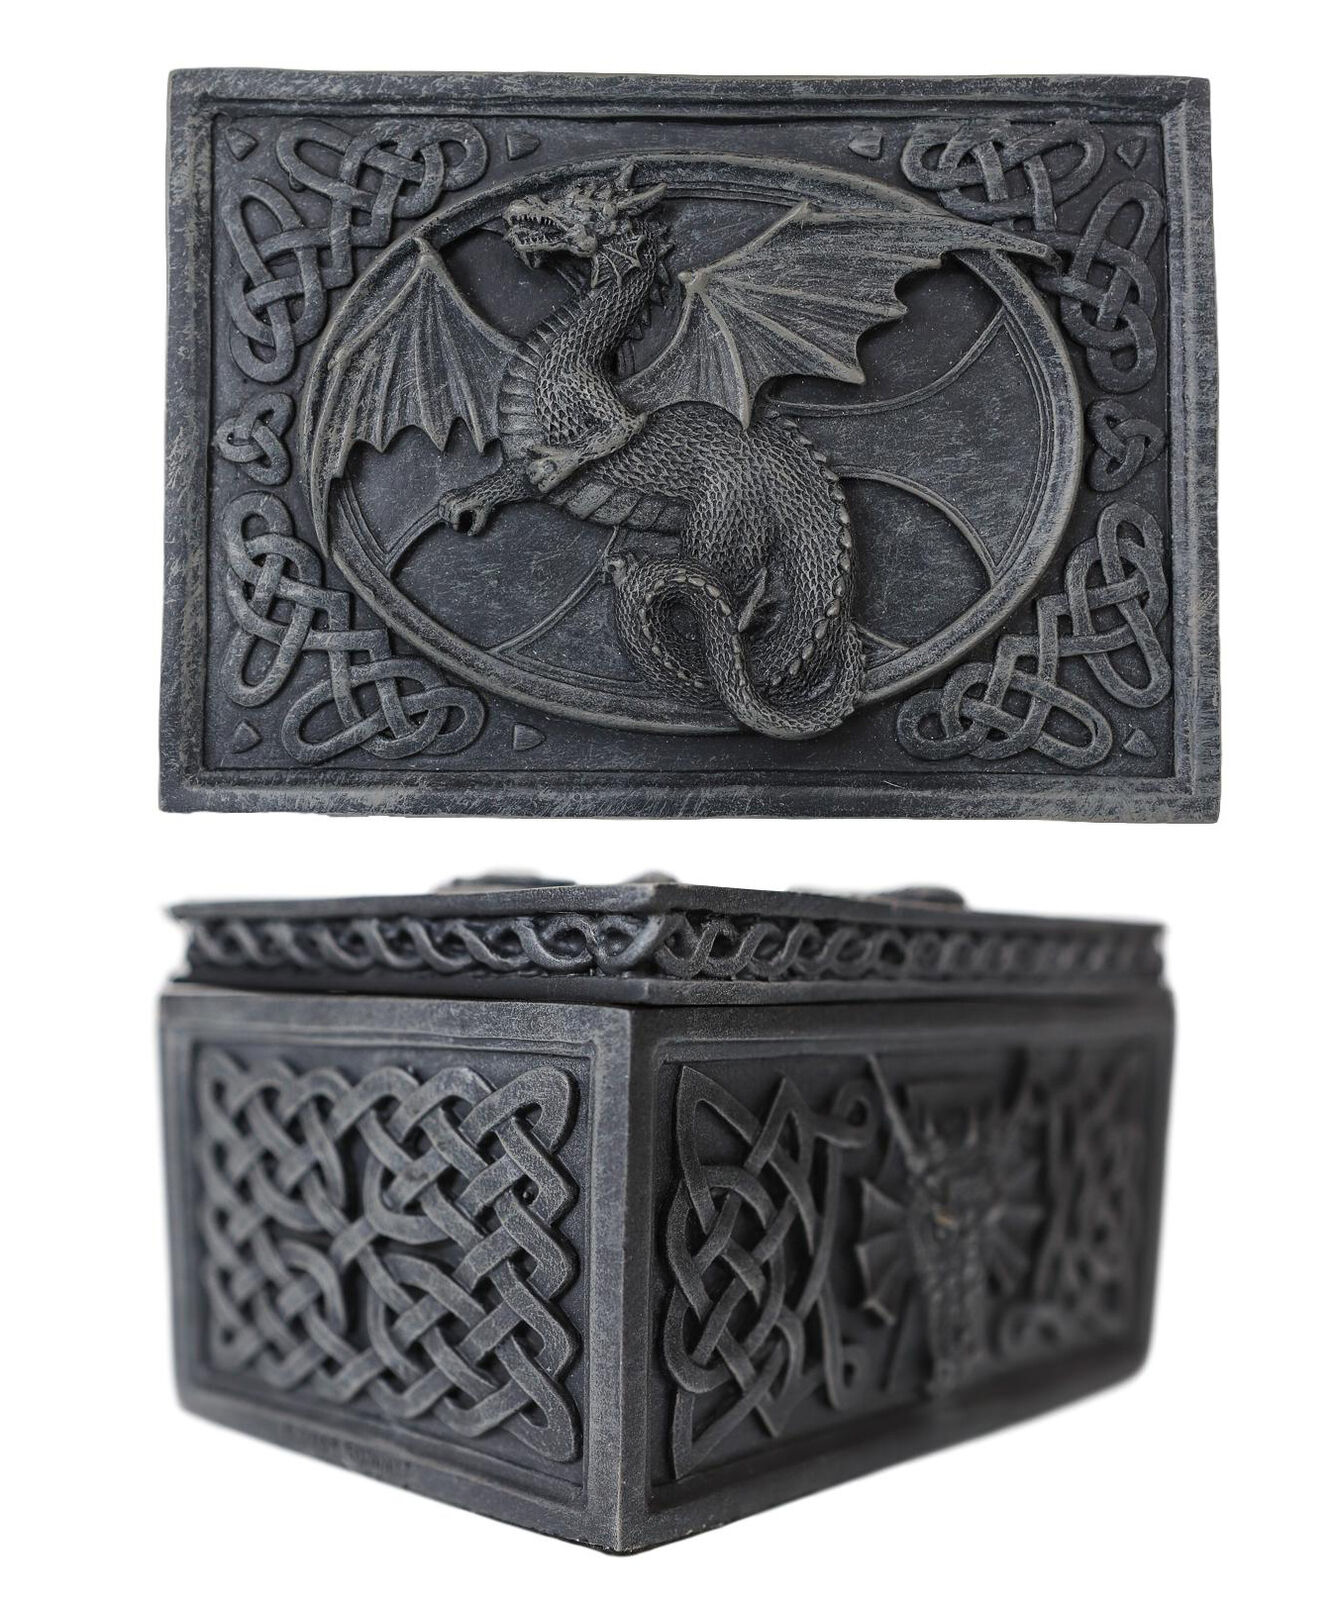 Ebros Celtic Knotwork Moon Dragon Voyage Decorative Jewelry Trinket Box 5